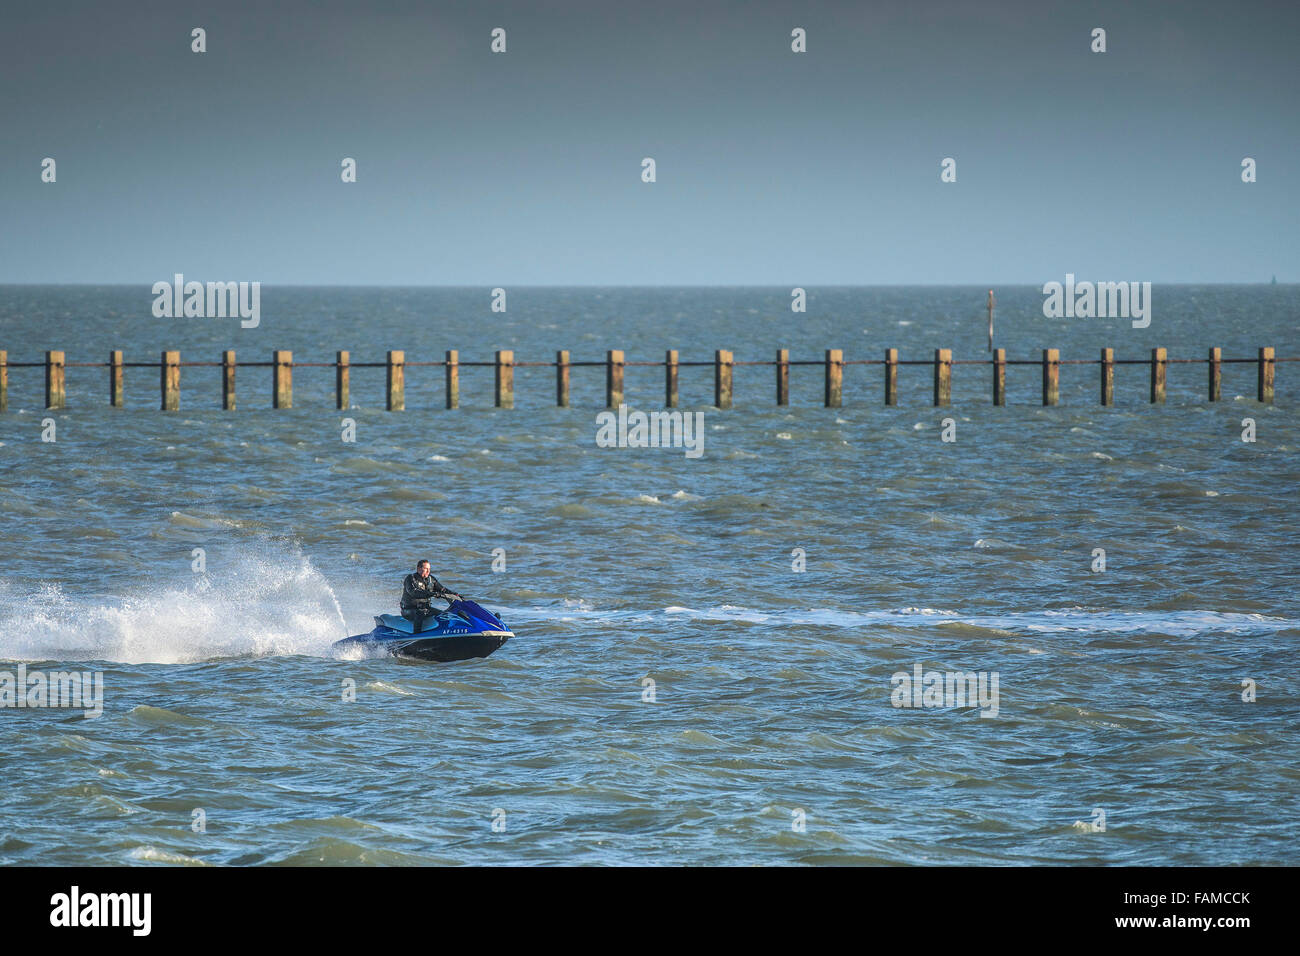 A jetskier speeds past the historic Shoebury Boom off the Essex coast, UK. Stock Photo